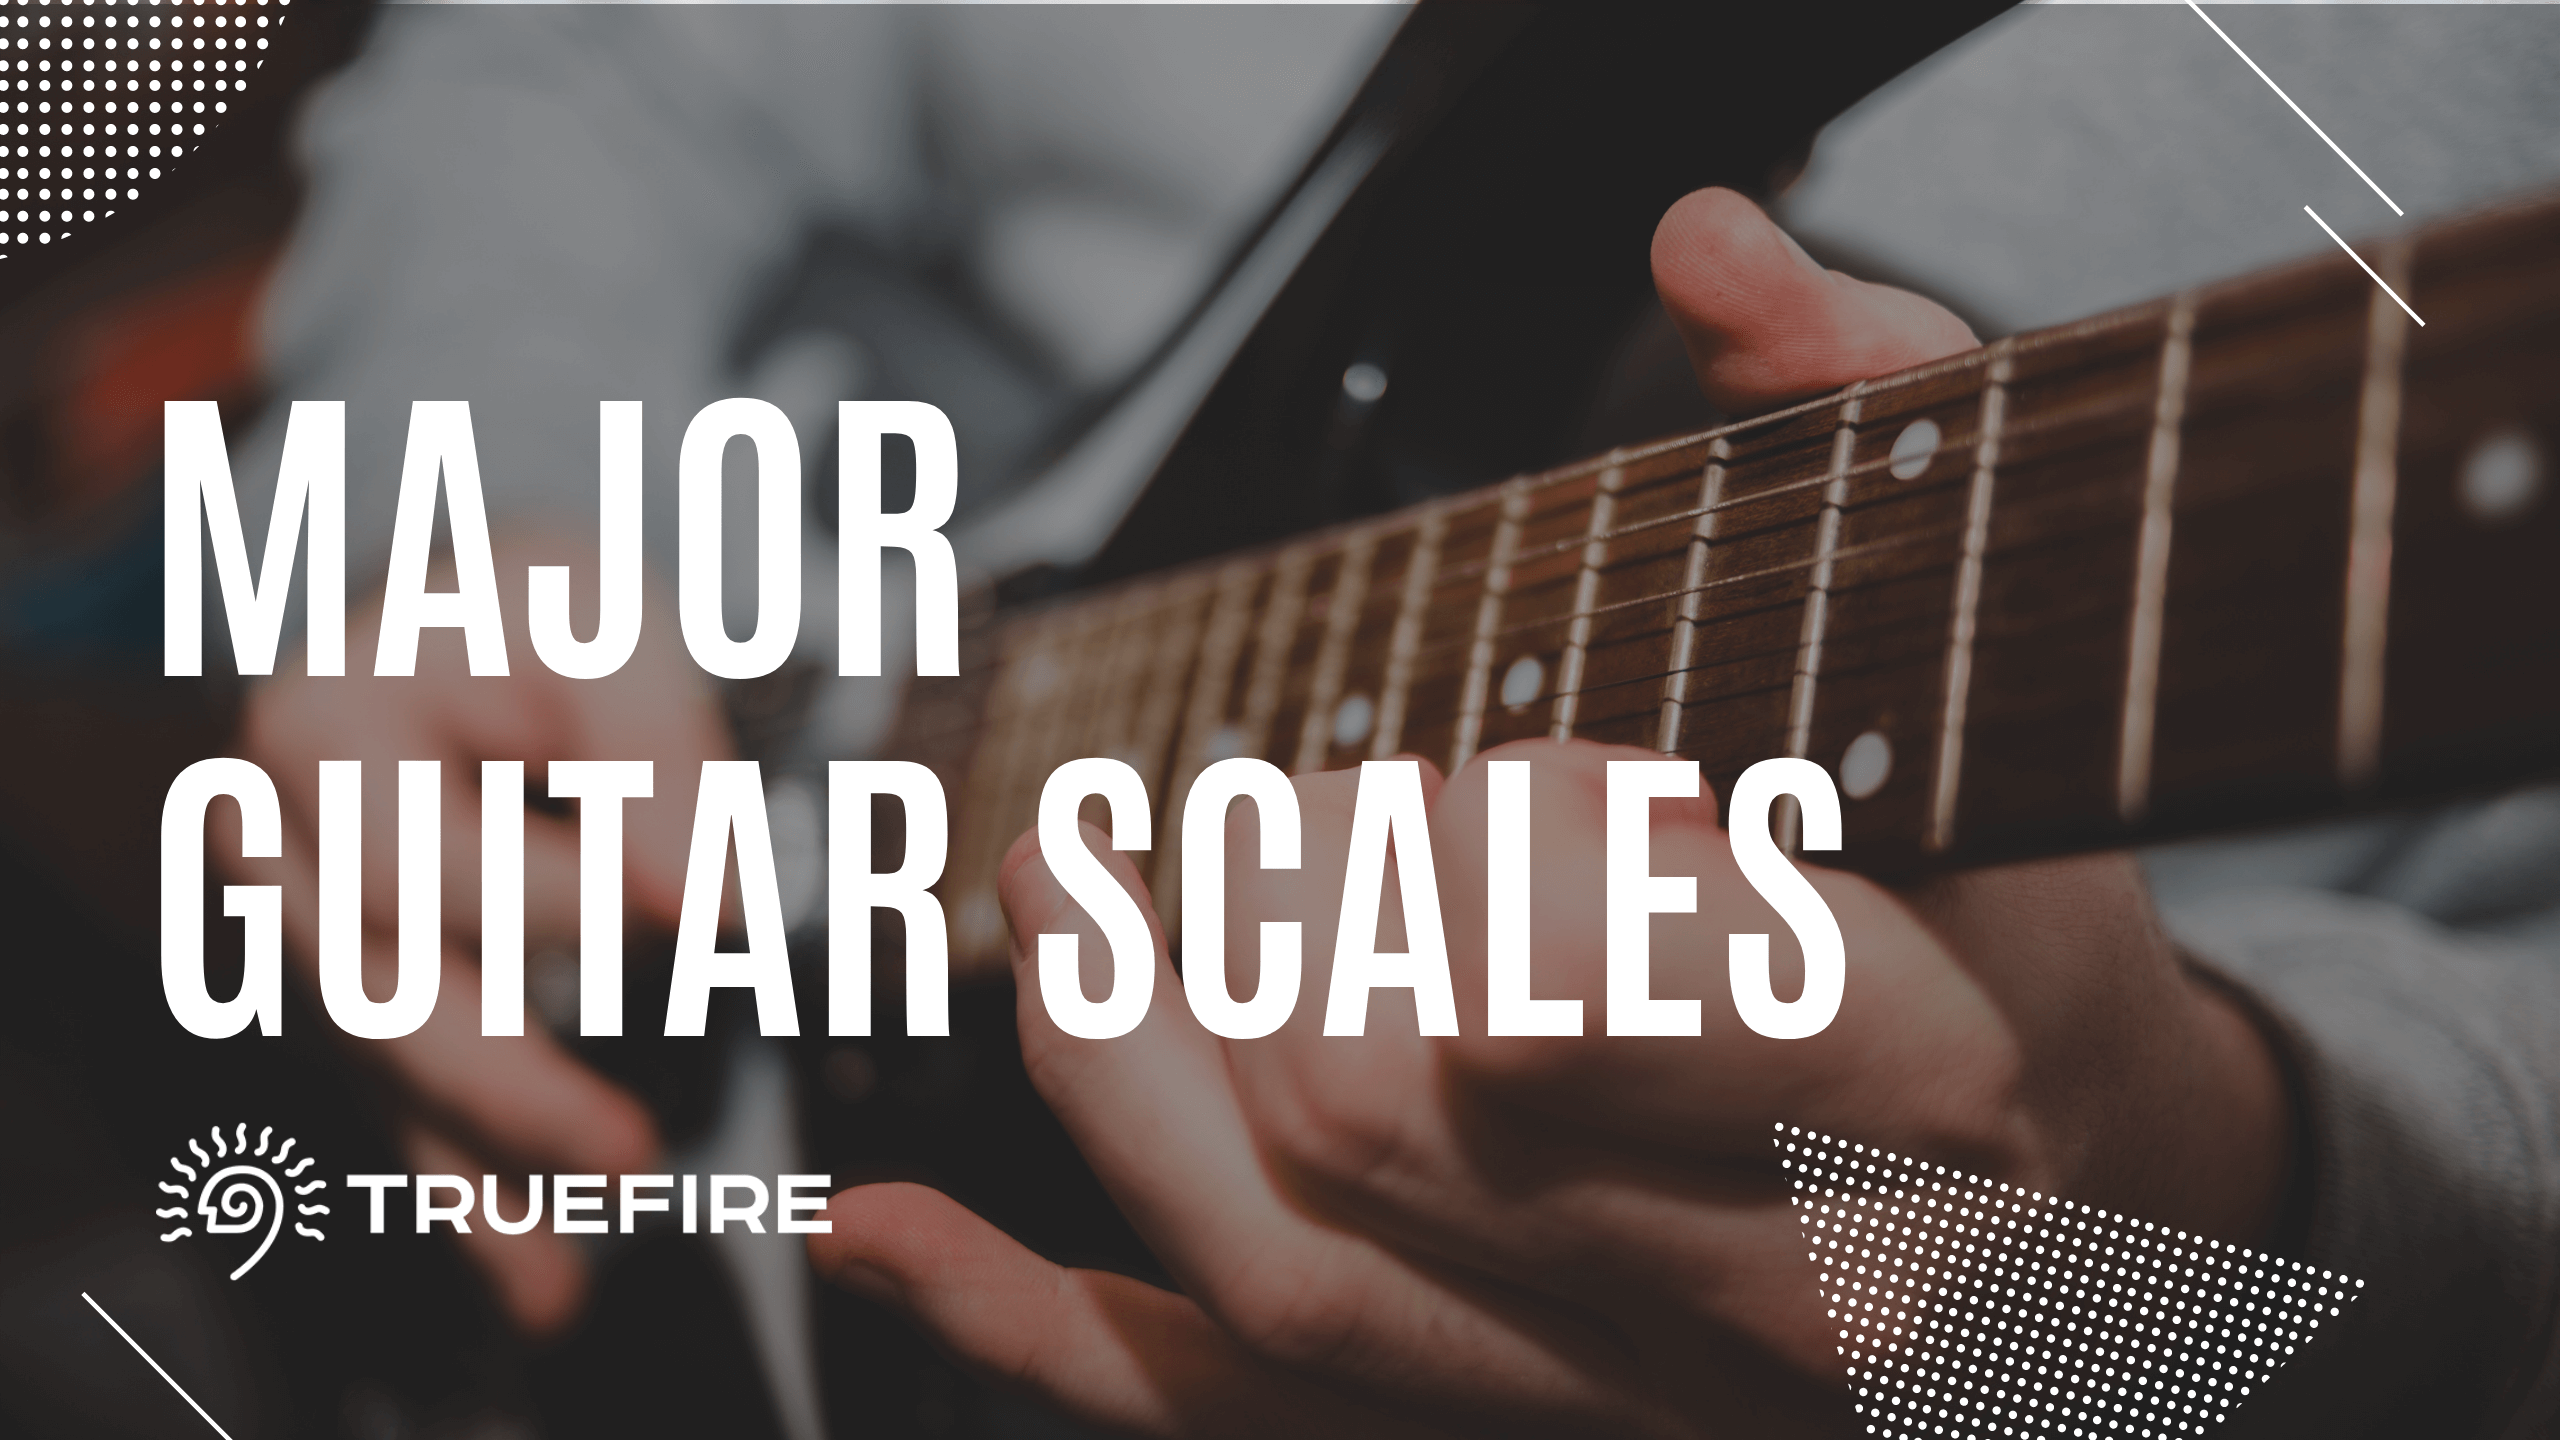 Major Guitar Scales